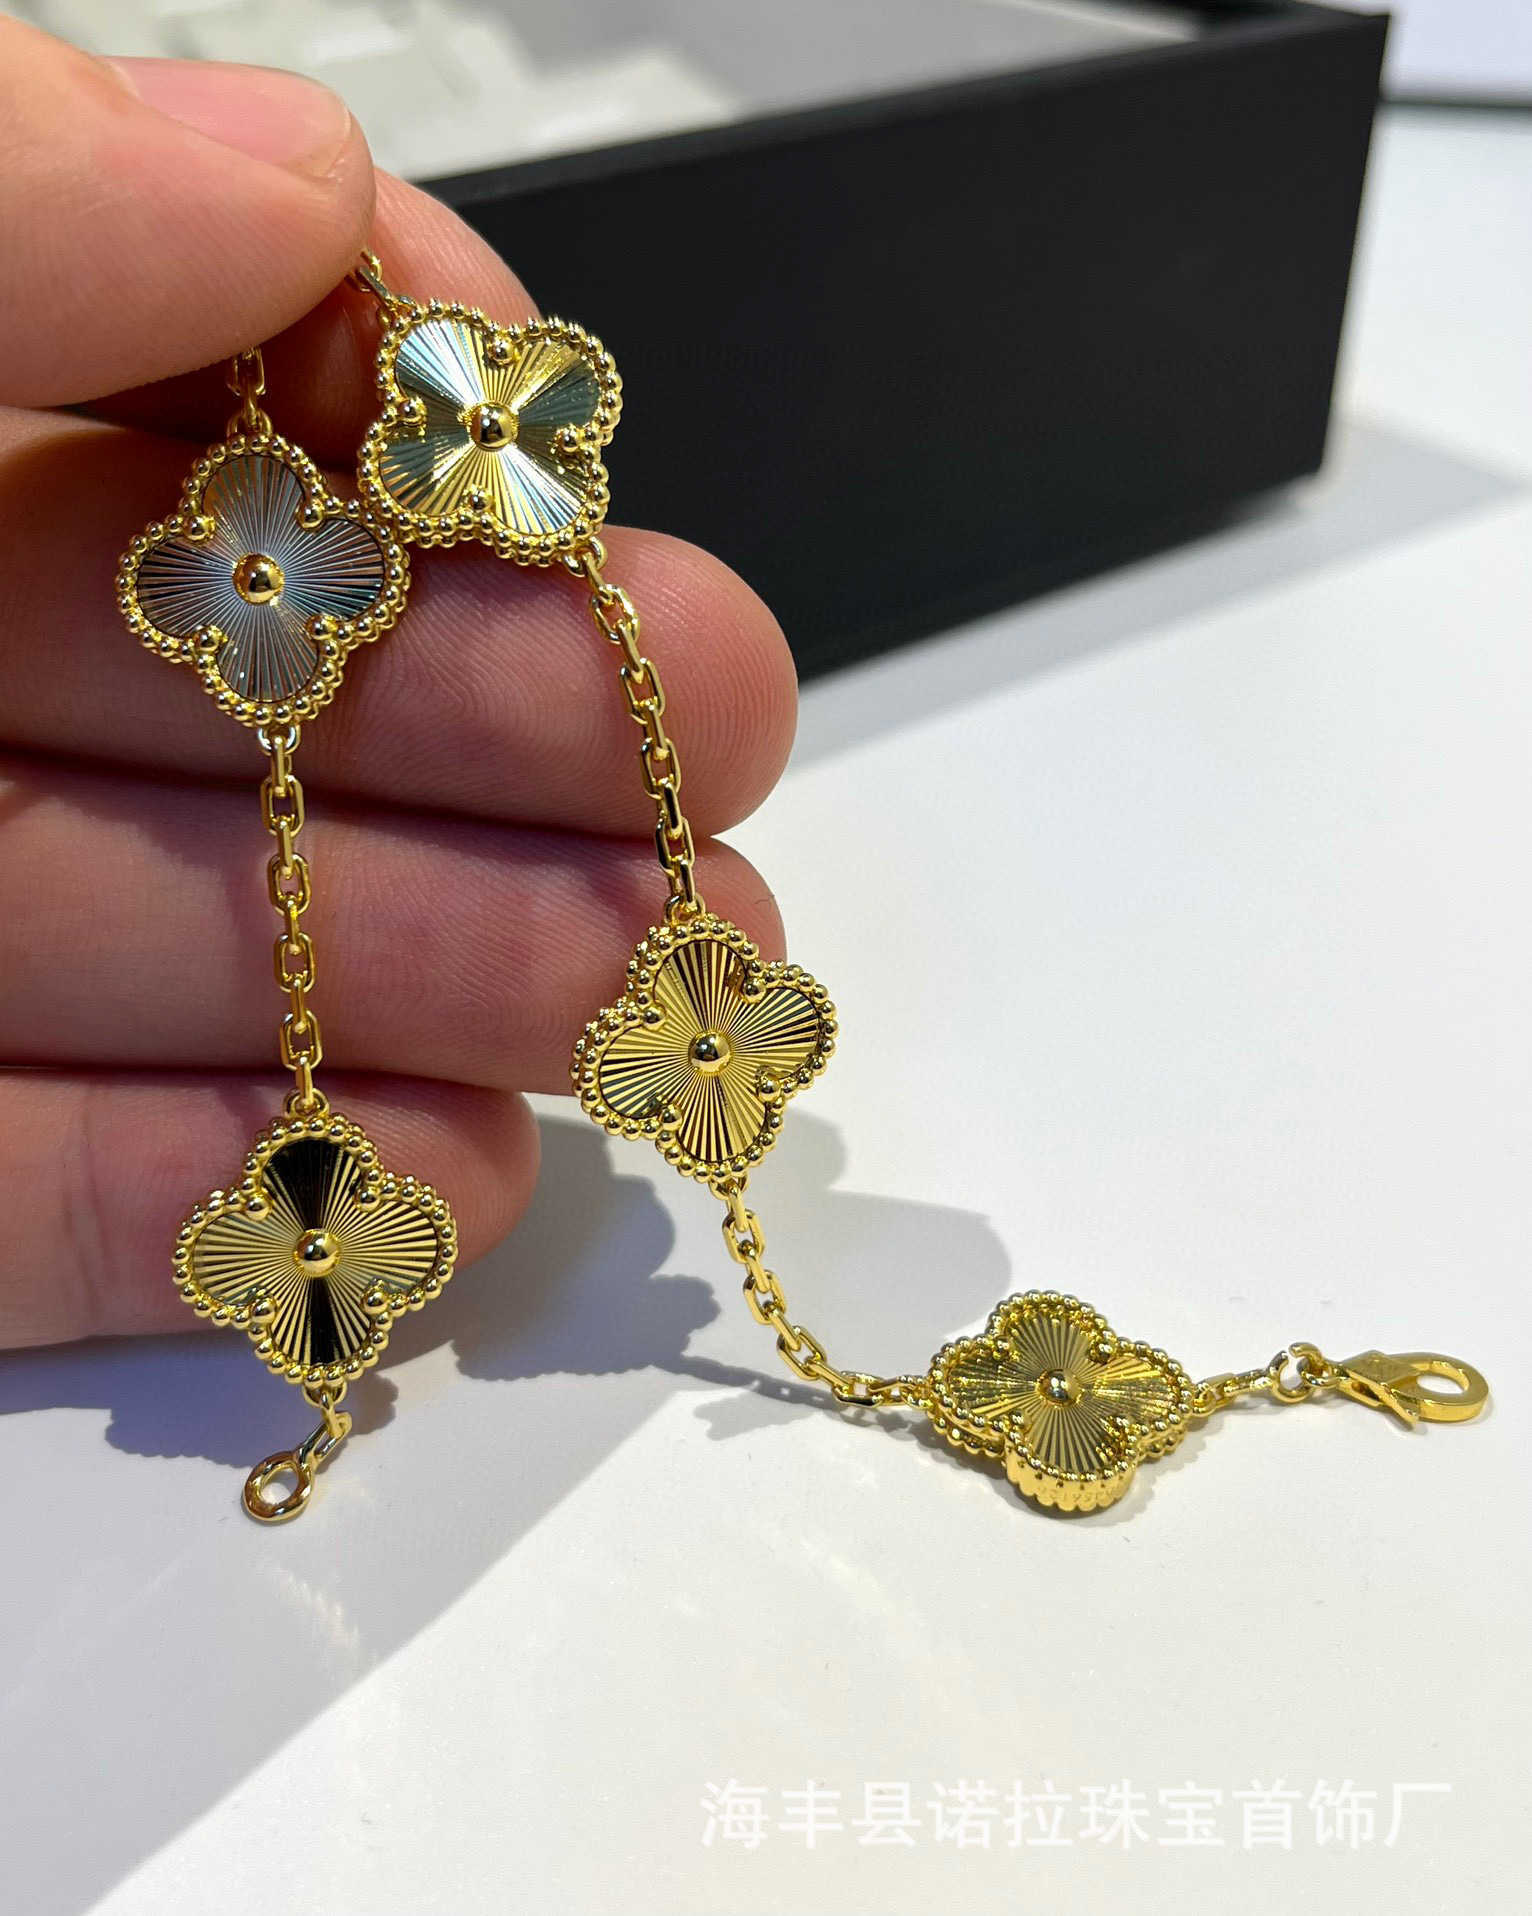 Link Designer Jewelry Luxury Bracelet Chain VanCa Kaleidoscope 18k Gold Van Clover Bracelet with Sparkling Crystals and Diamonds Perfect Gift for Women Girls 2HBP